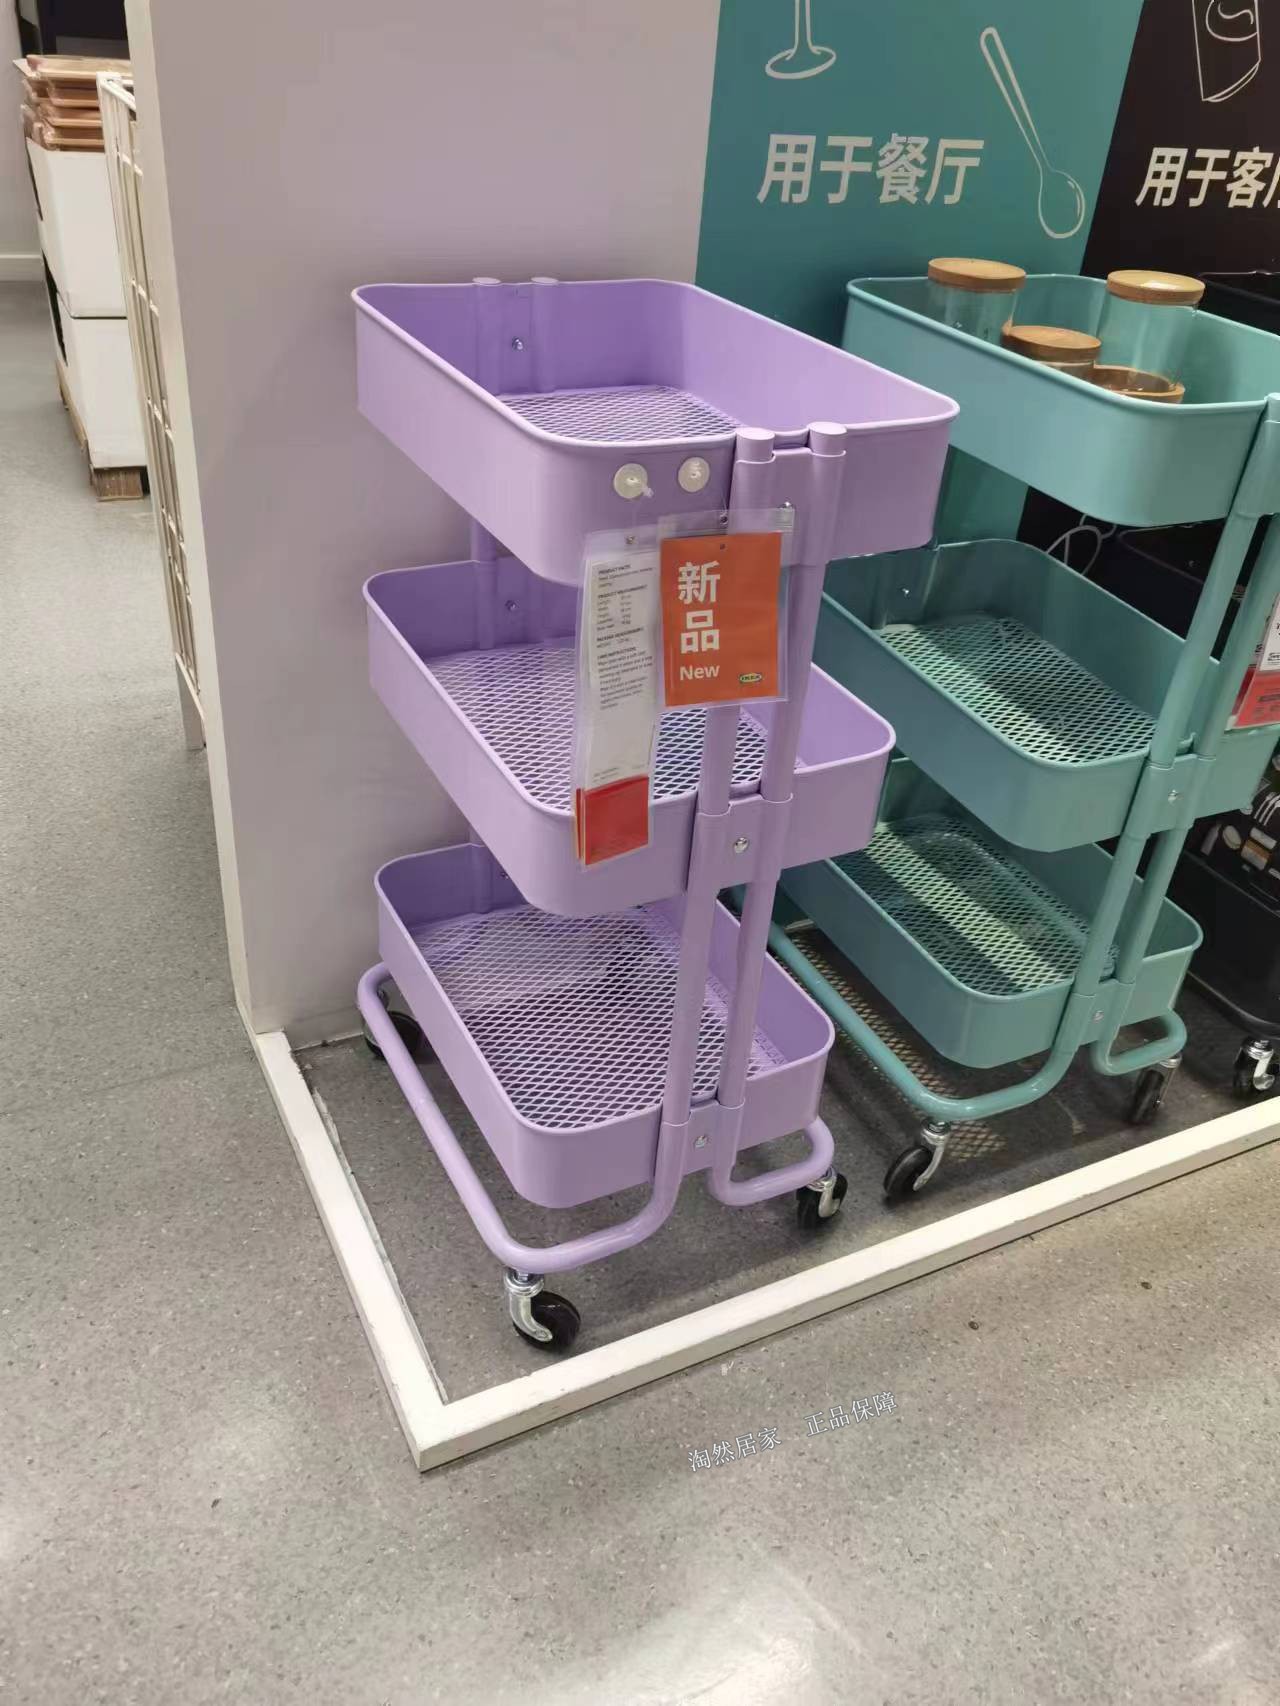 IKEA宜家拉斯克手推车厨房浴室客厅置物架滚轮收纳车居家北欧紫色 - 图3